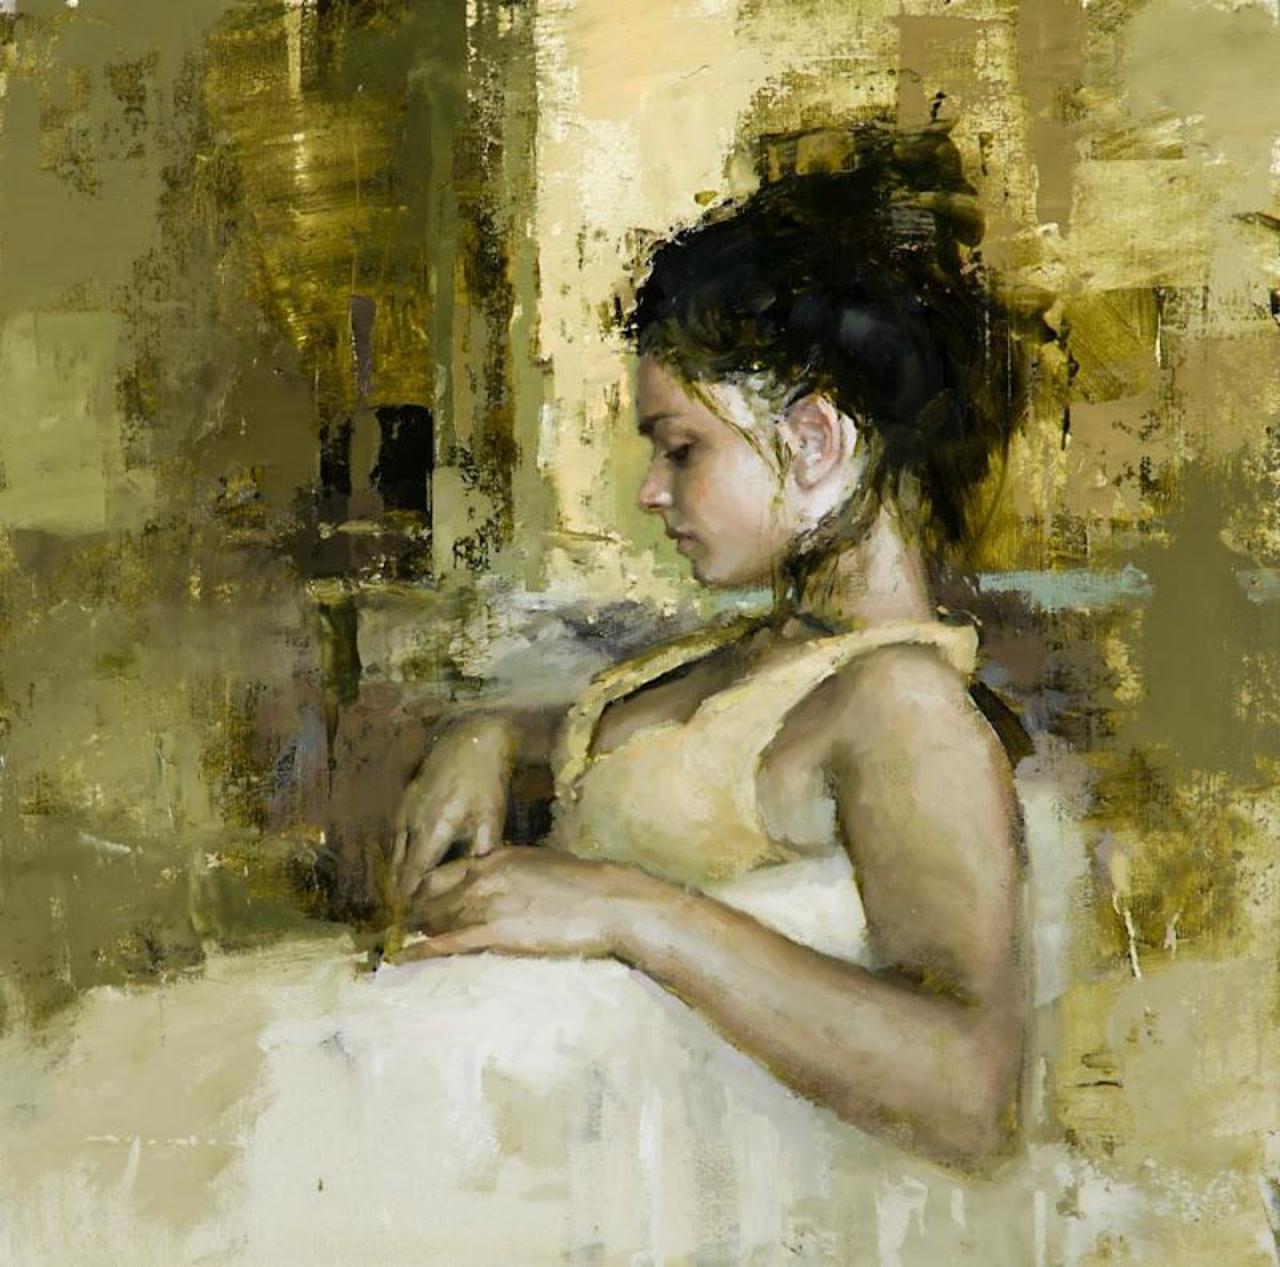 By Jeremy Mann ~ #art #painting #ajarmfield #portrait http://t.co/ae90bQtxhI